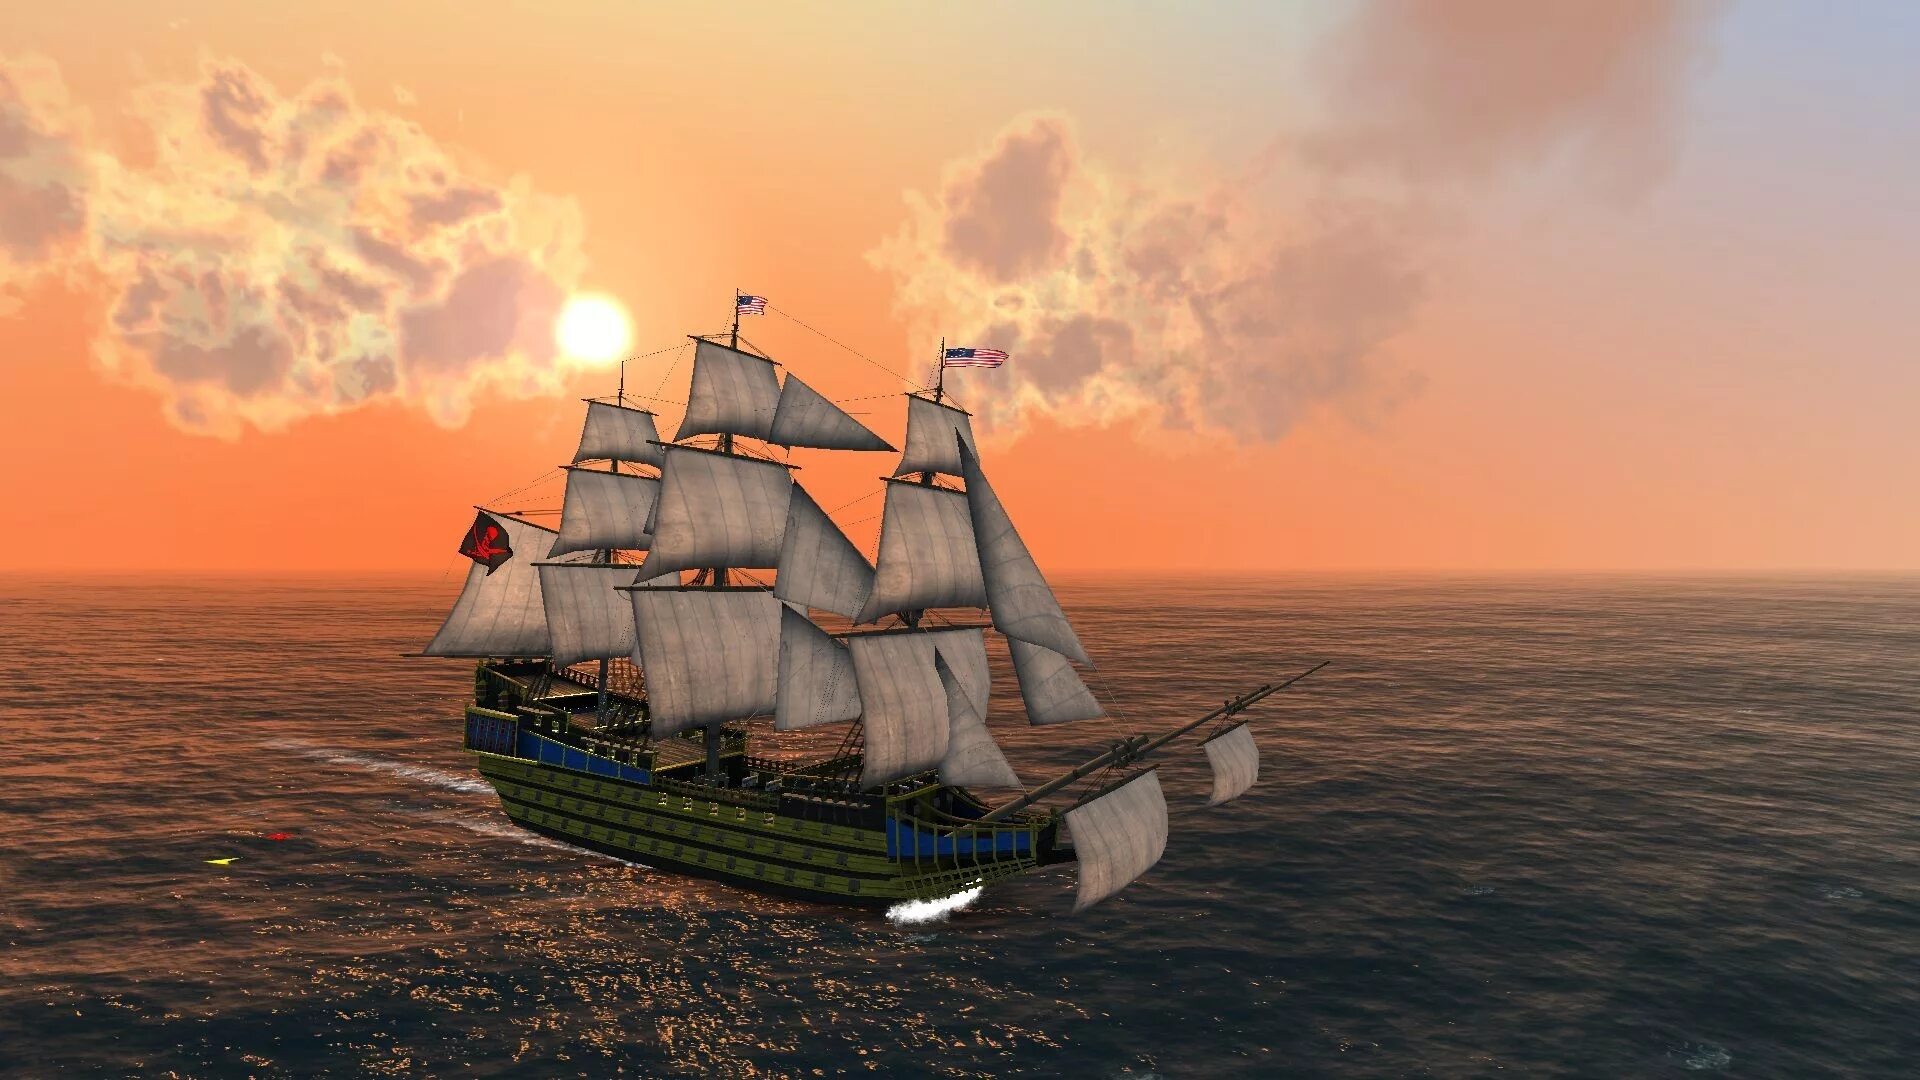 Пираты Карибиан Хант. Пираты Карибского моря (игра). Игра the Pirate Caribbean Hunt. Пираты Карибского моря игра корабли.